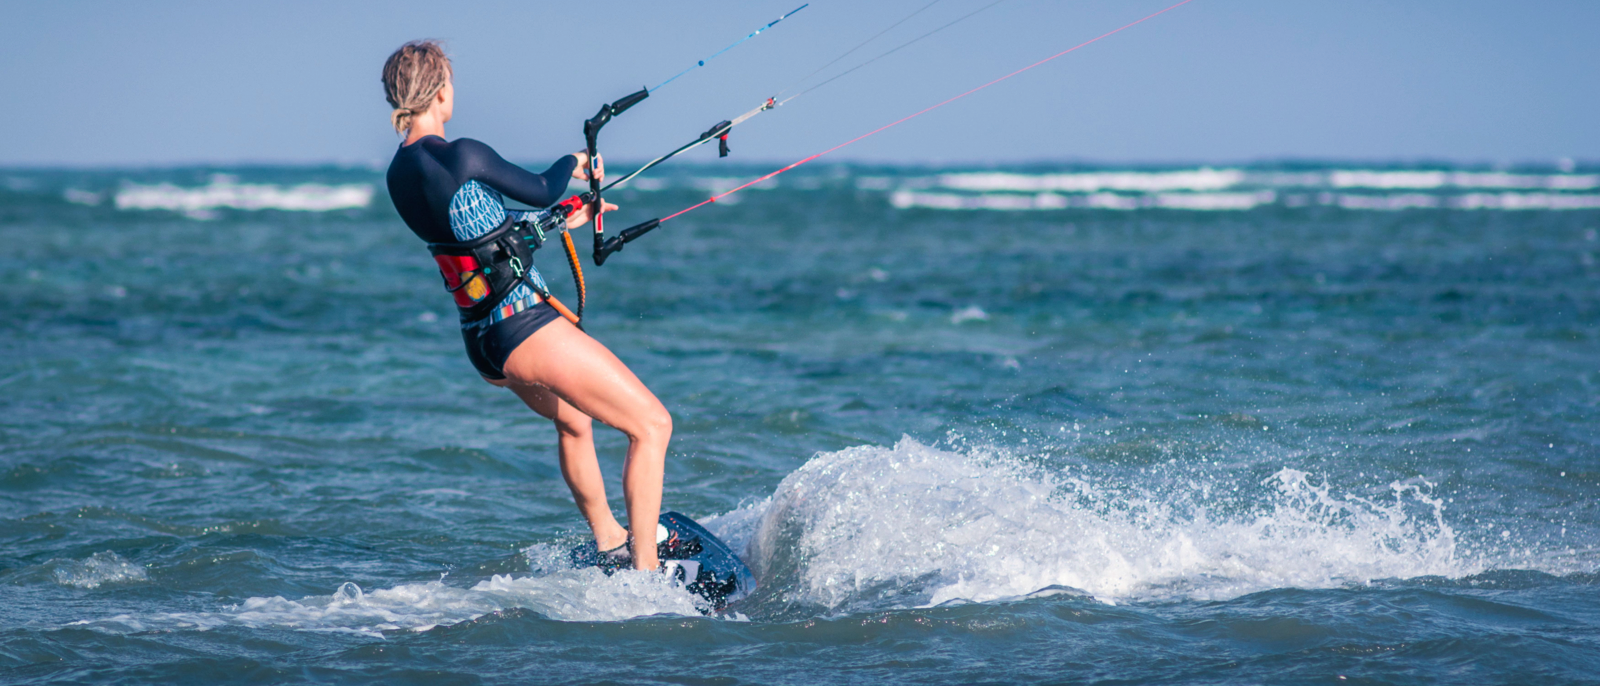 kiteboarder kitesurfer woman athlete performing kitesurfing kiteboarding jumping